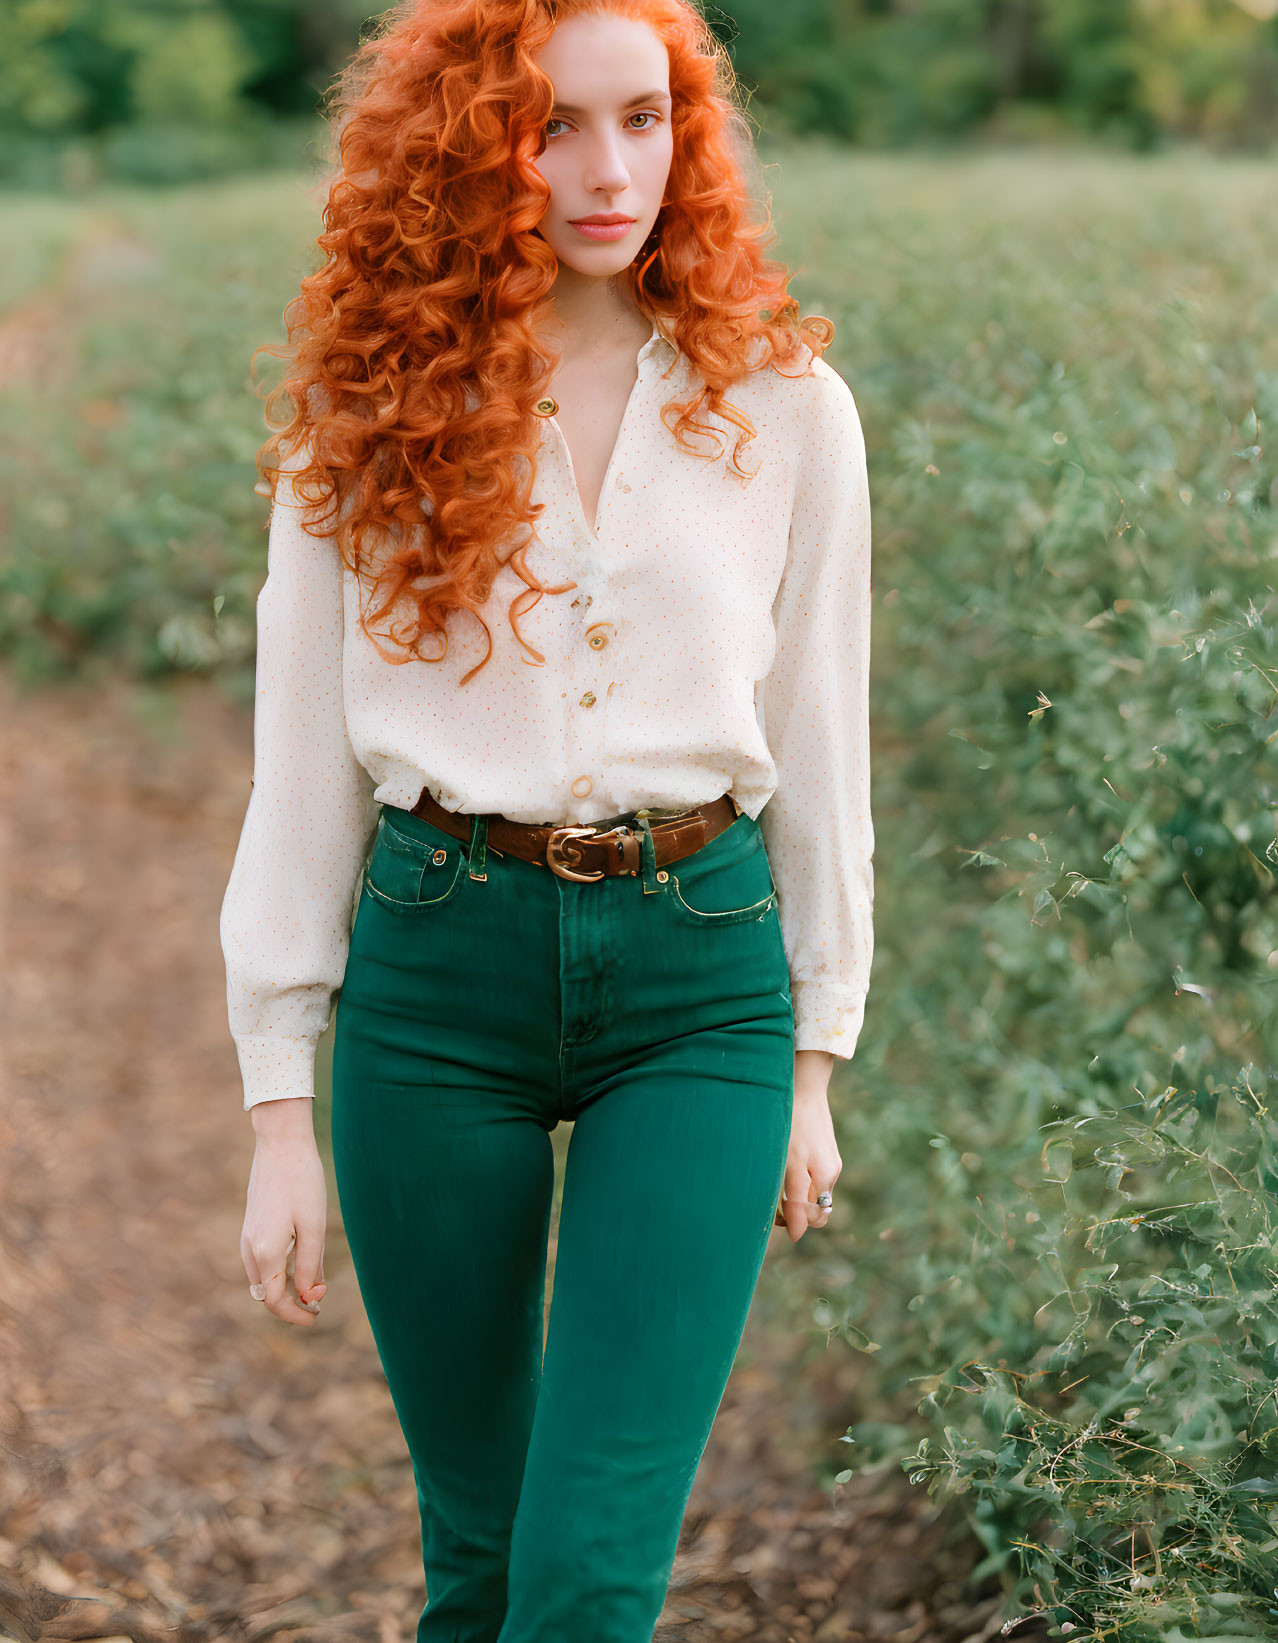 Gorgeous redhead woman